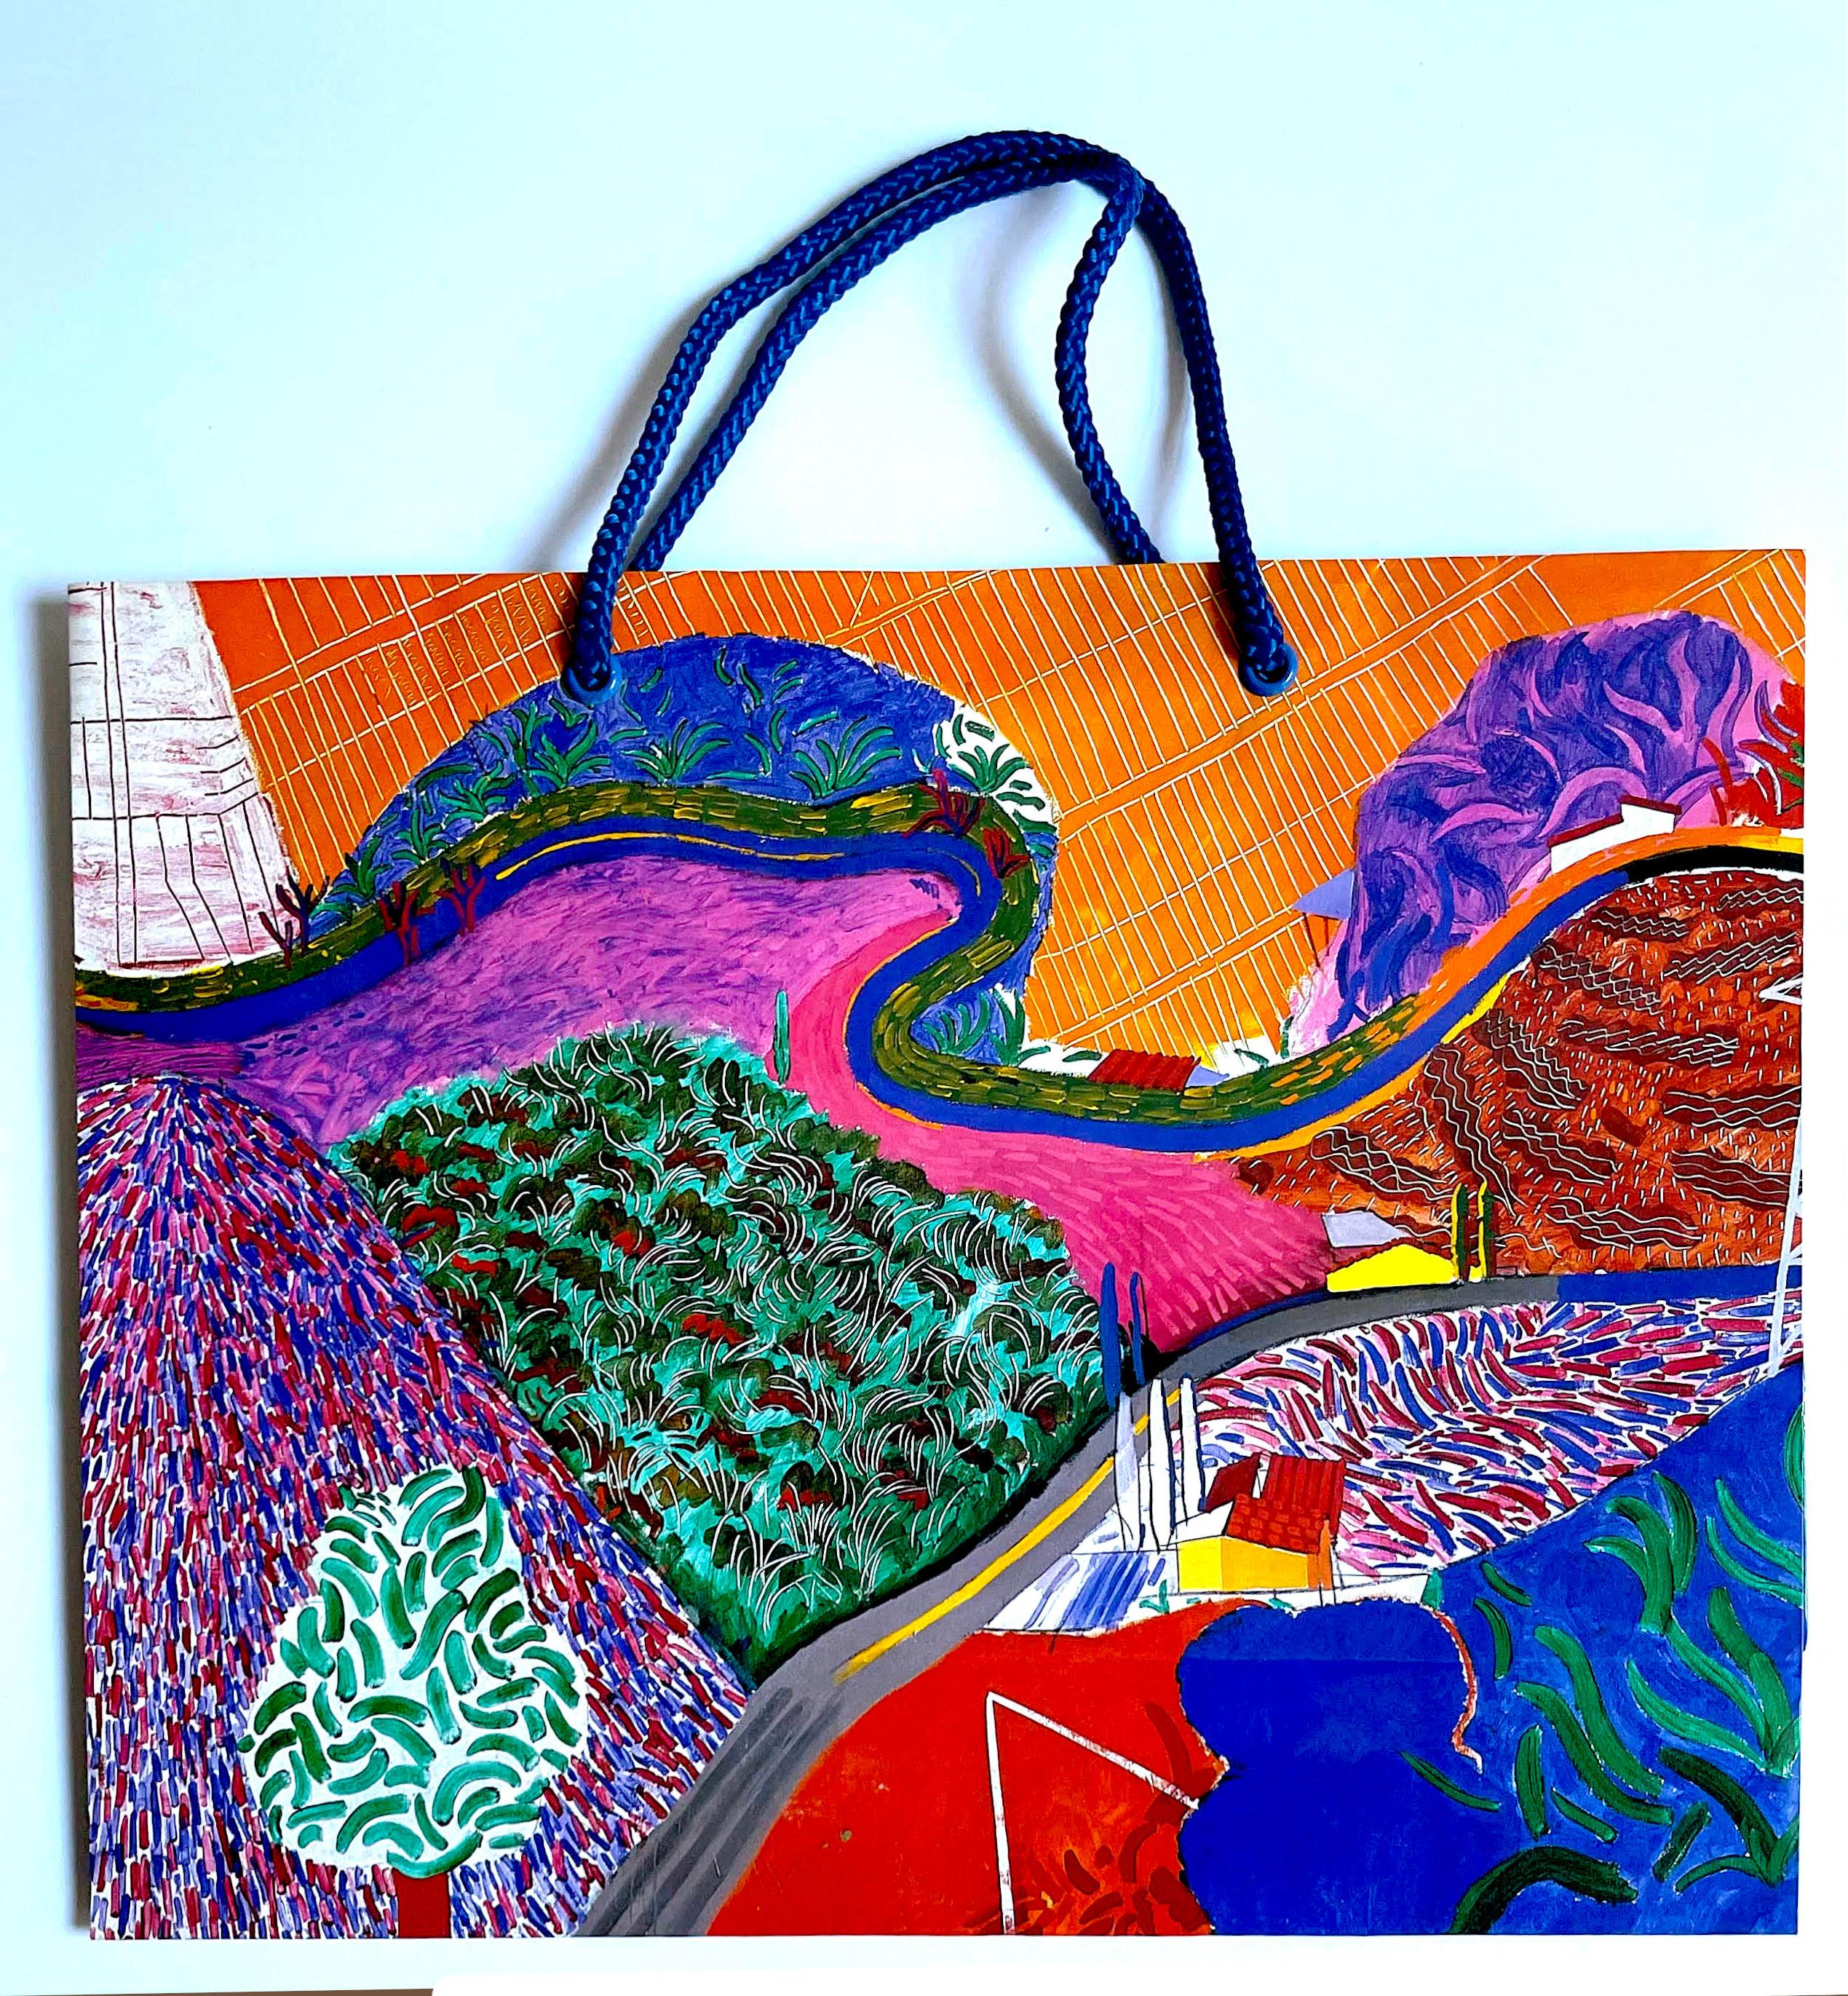 LA County Museum of Art Promotional Bag - Mixed Media Art by David Hockney